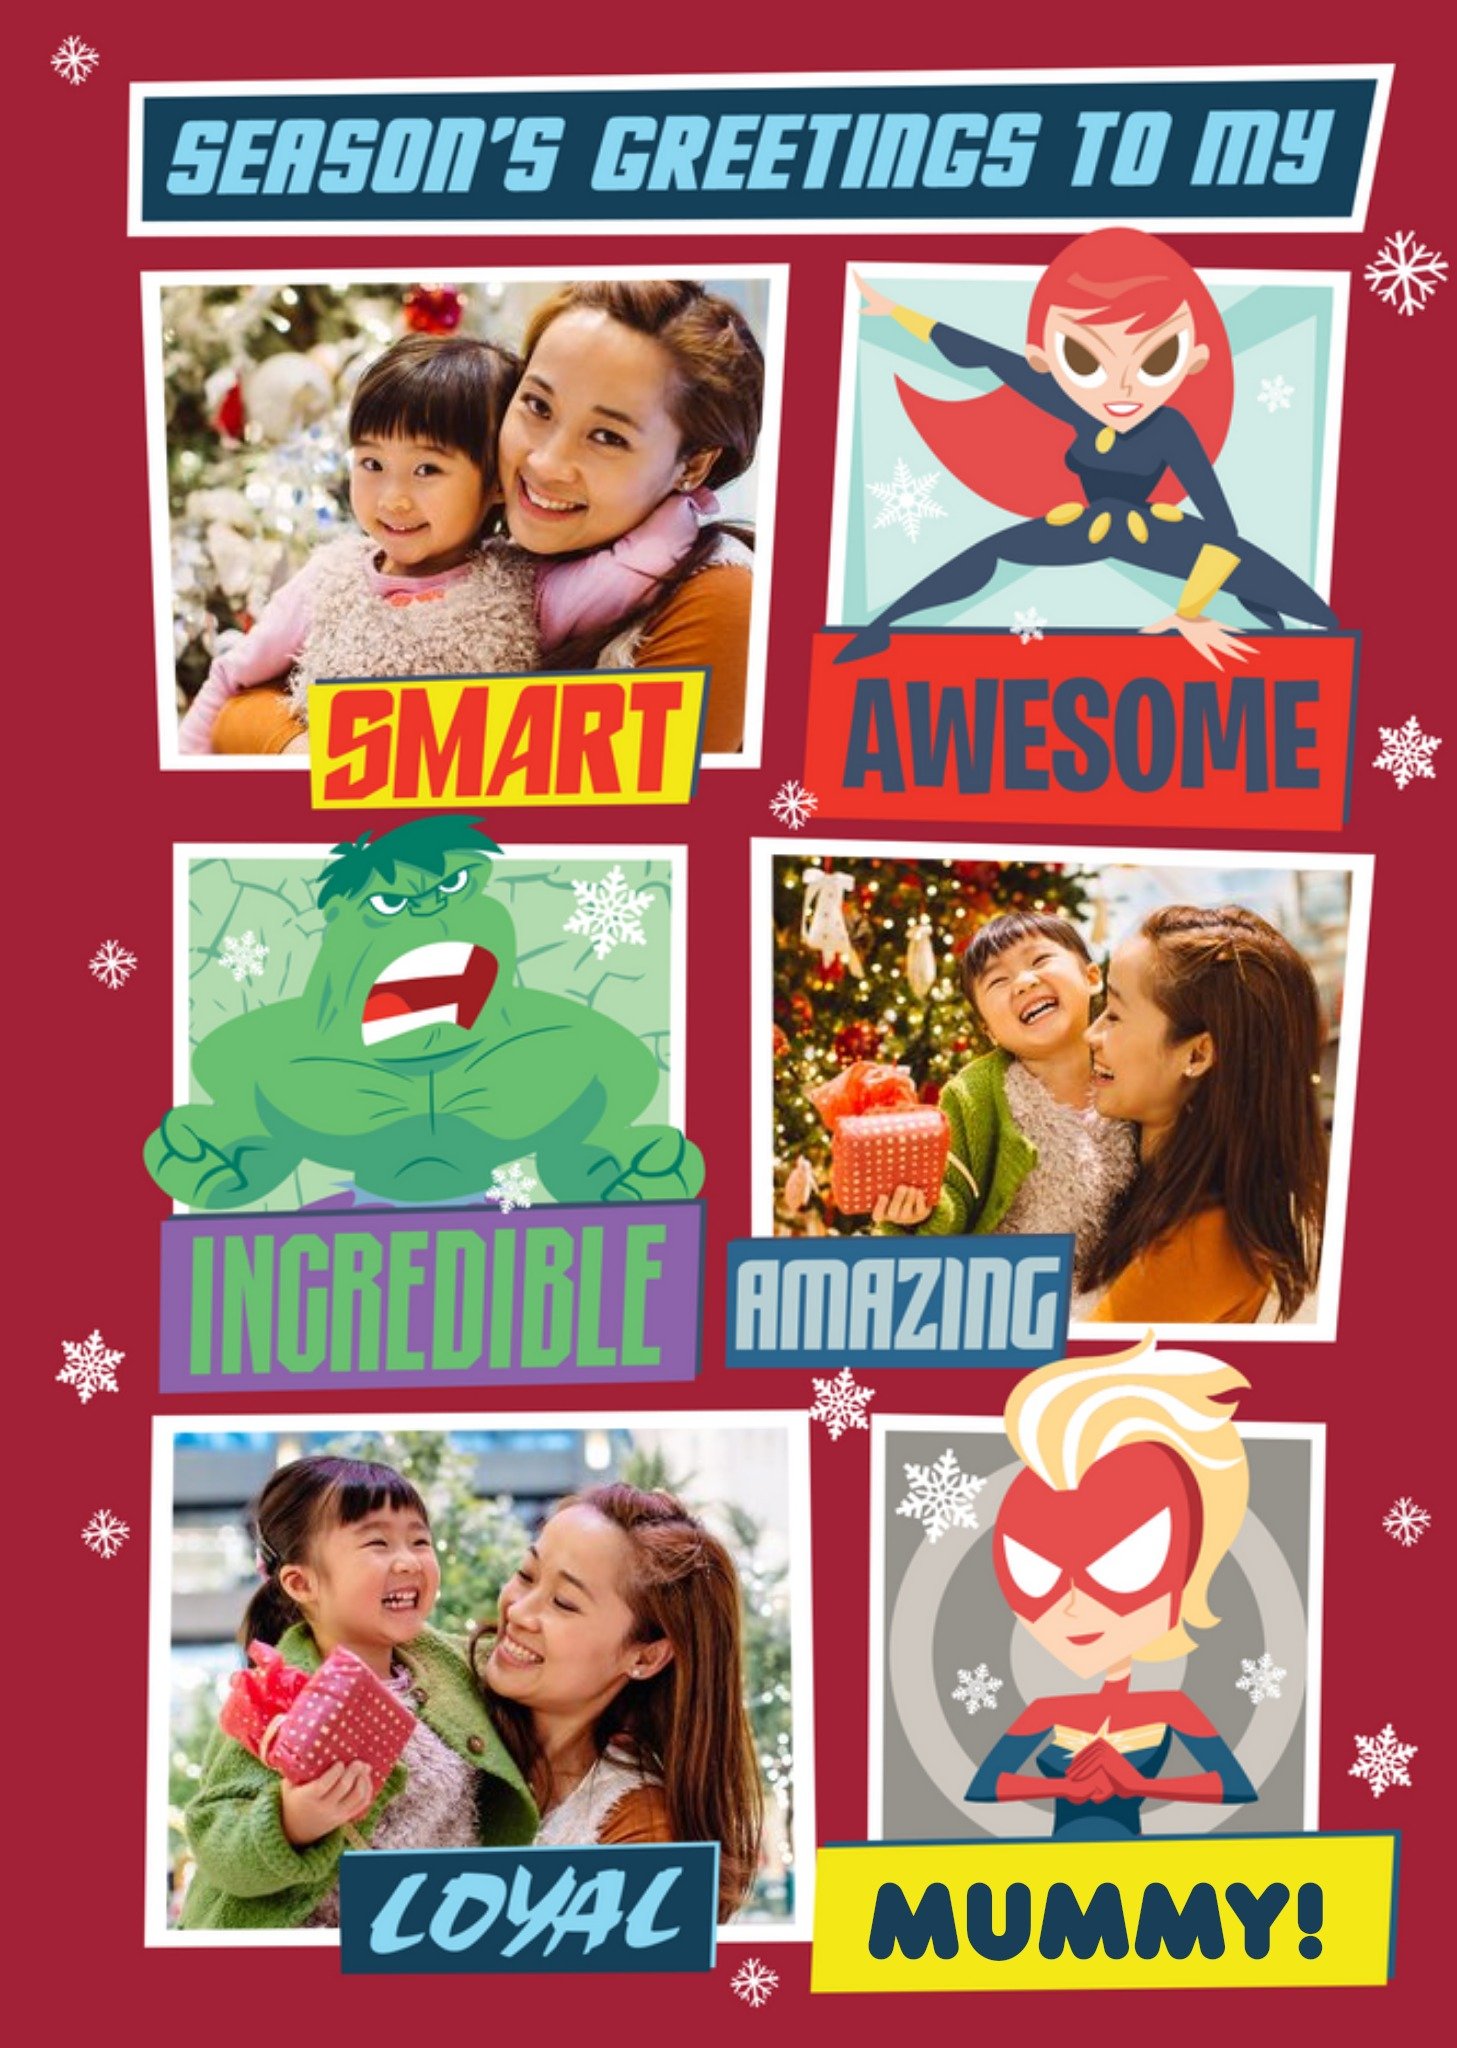 Disney Marvel Comics Avengers Mummy Photo Upload Christmas Card Ecard